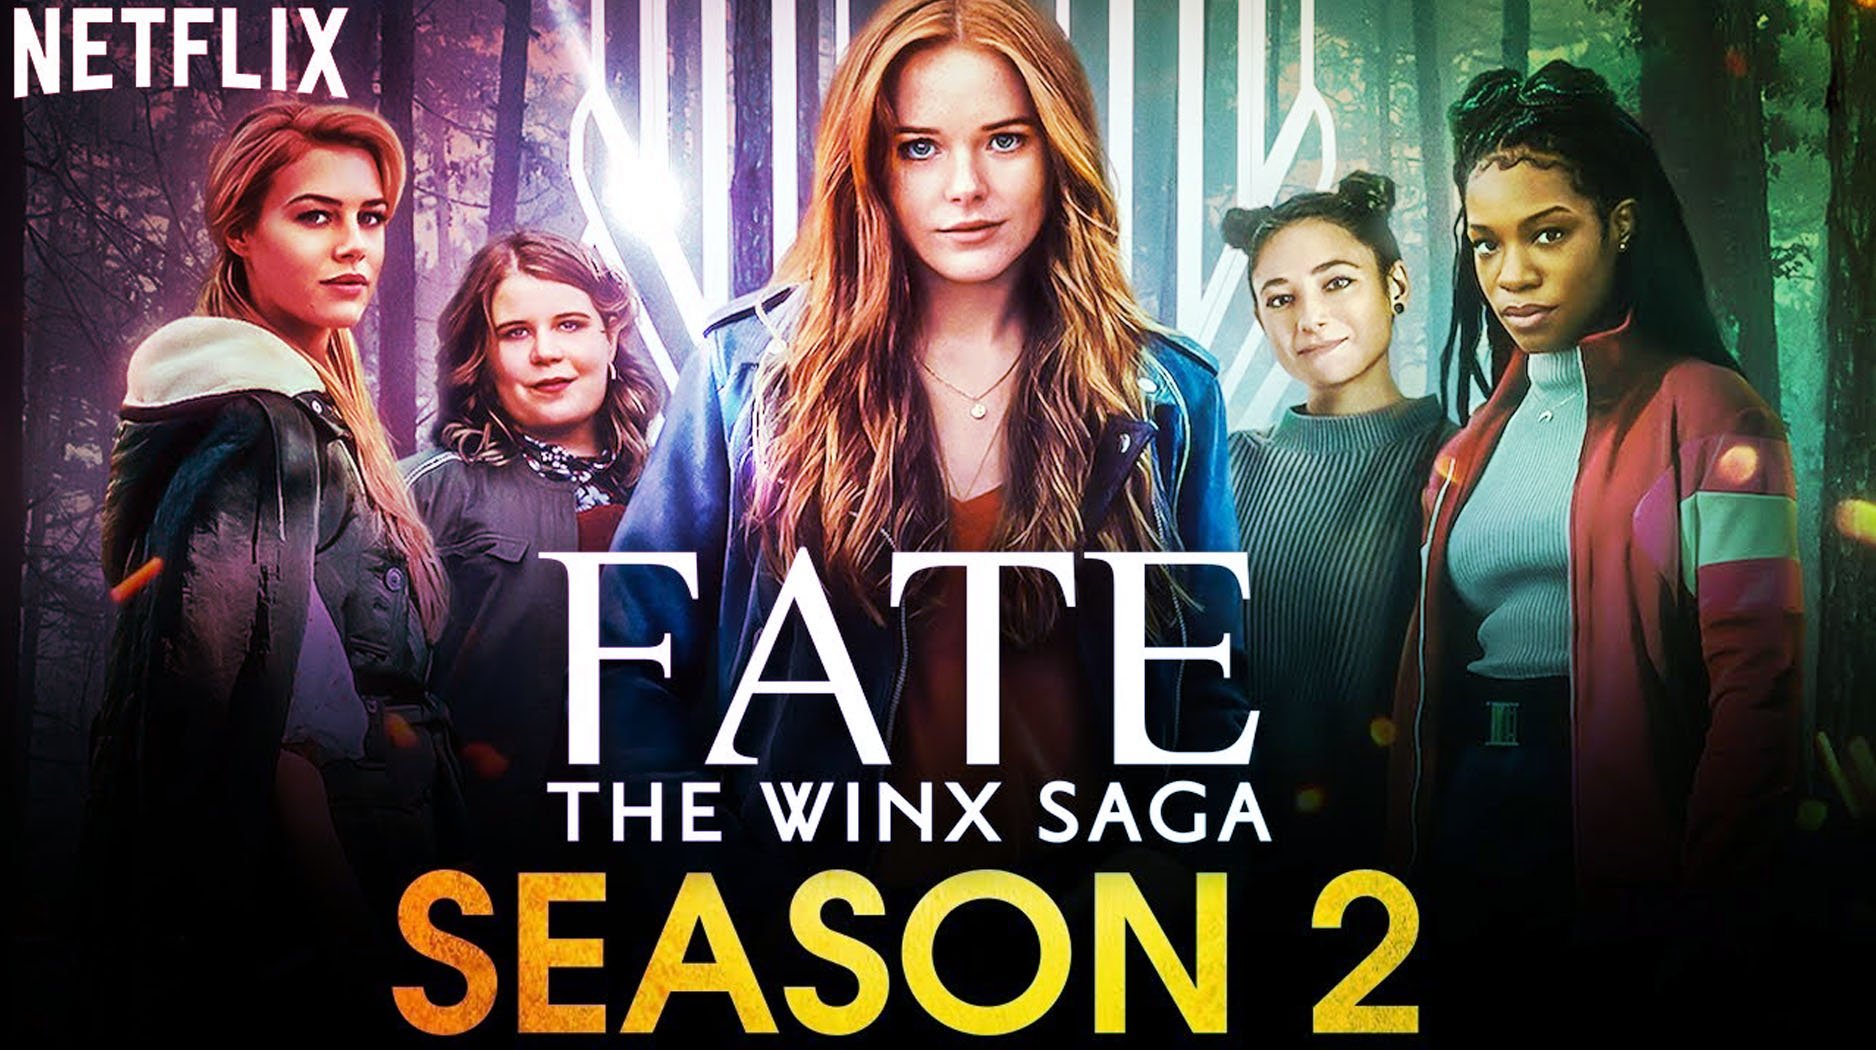 Fate: The Winx Saga Season 2